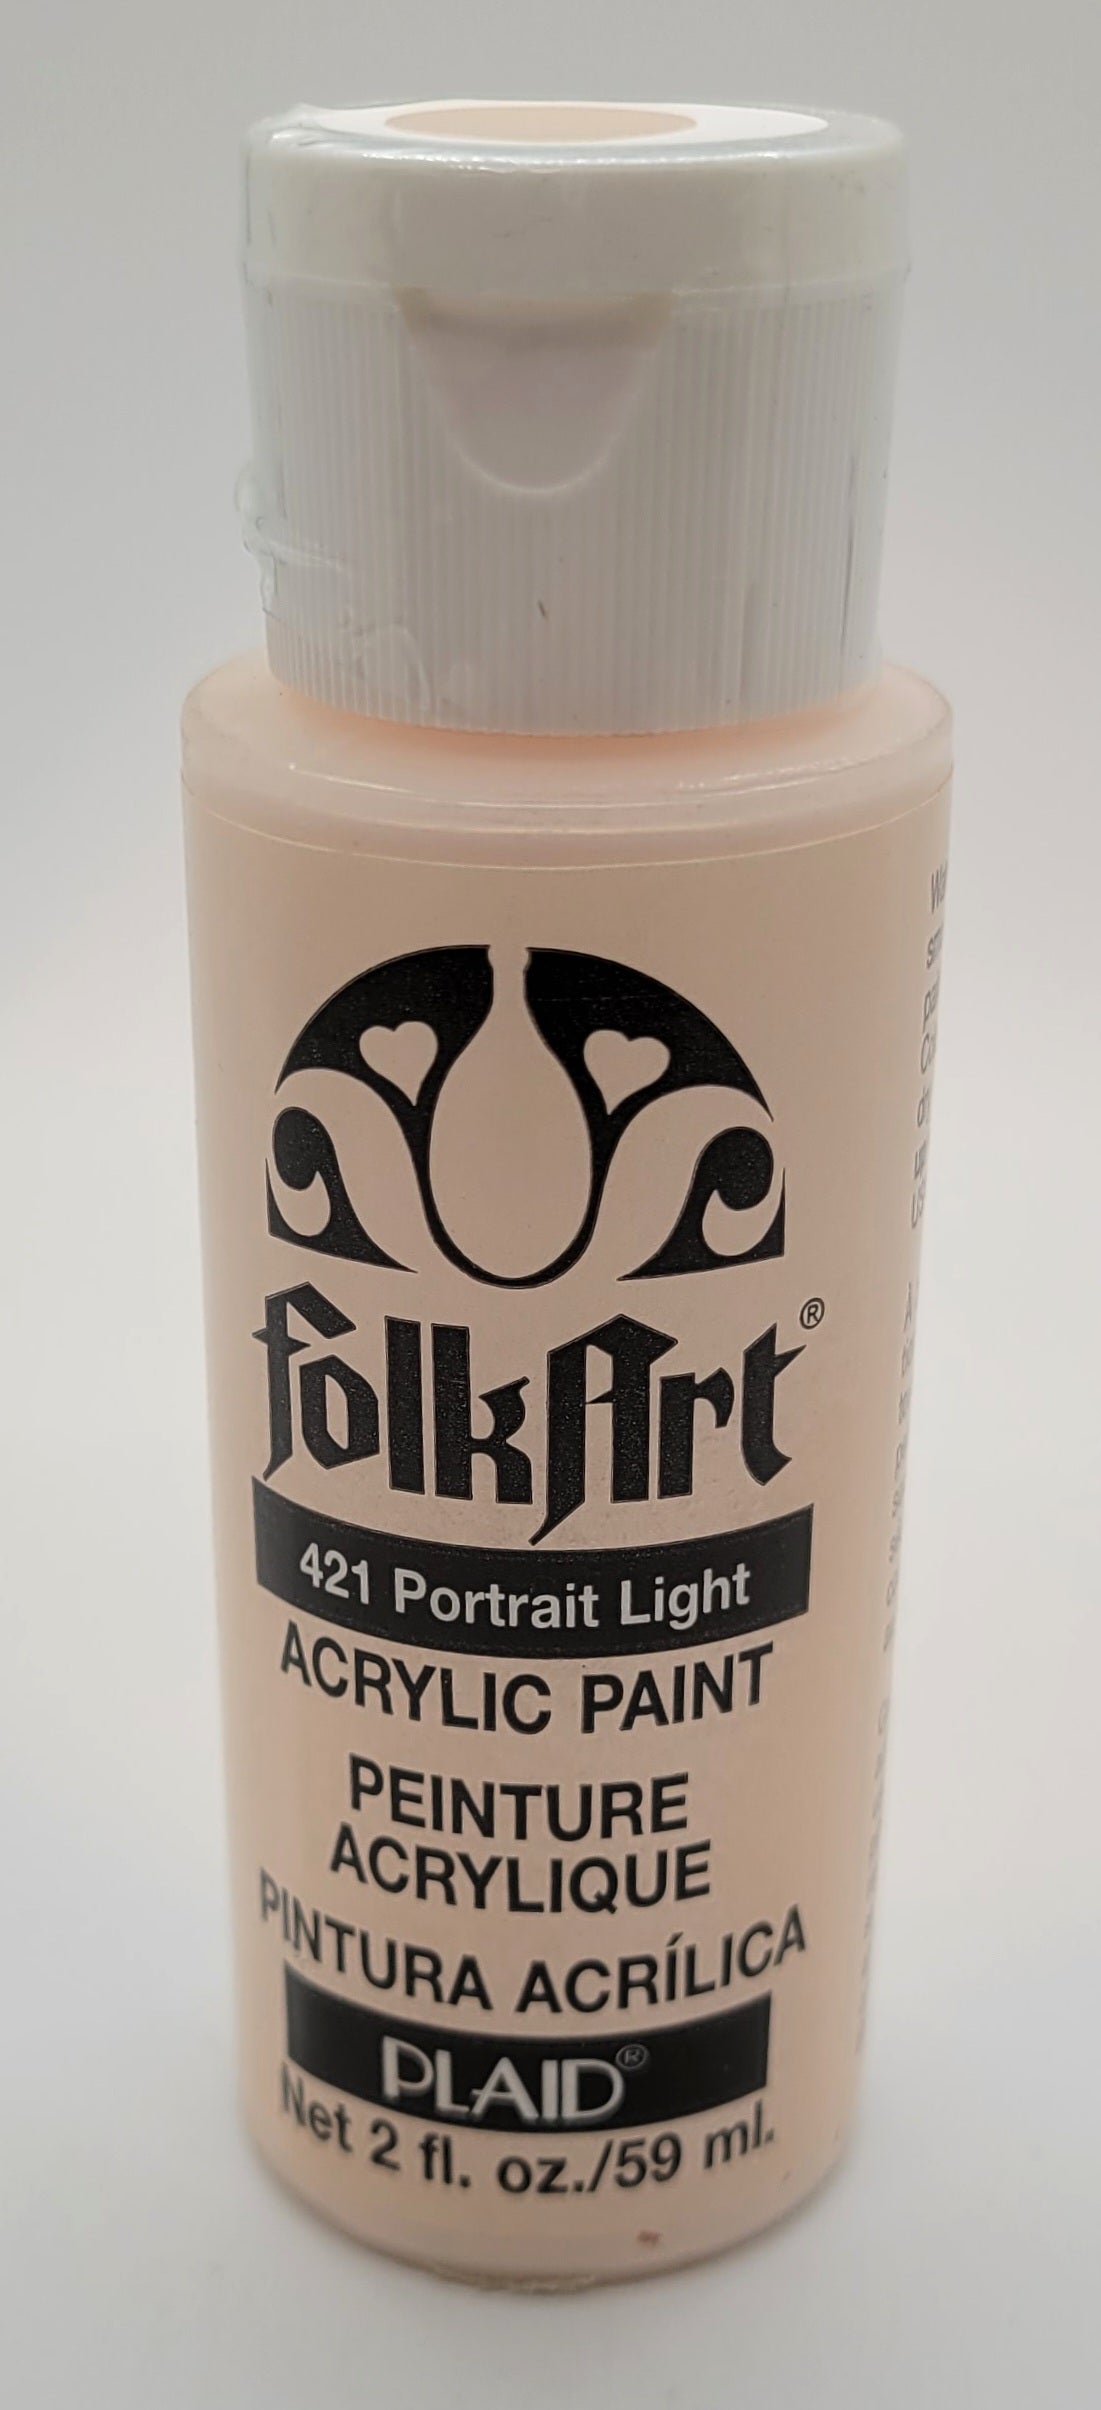 Plaid FolkArt Glow In The Dark Acrylic Paint - Blue, 2 oz, Bottle